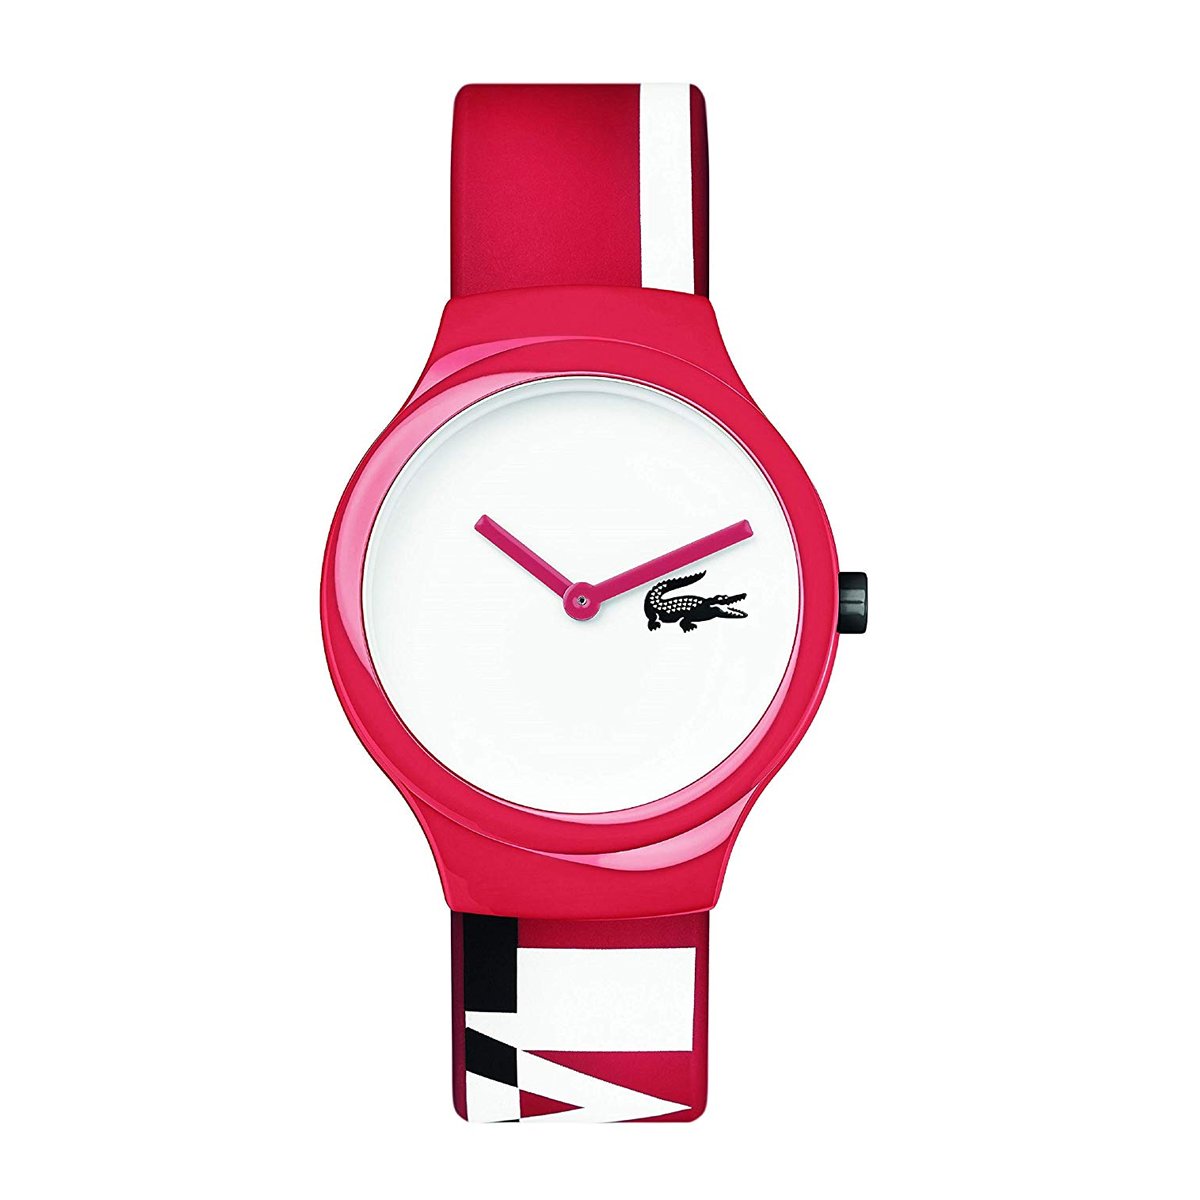 Reloj deportivo Goa Lacoste rosa unisex 2020130